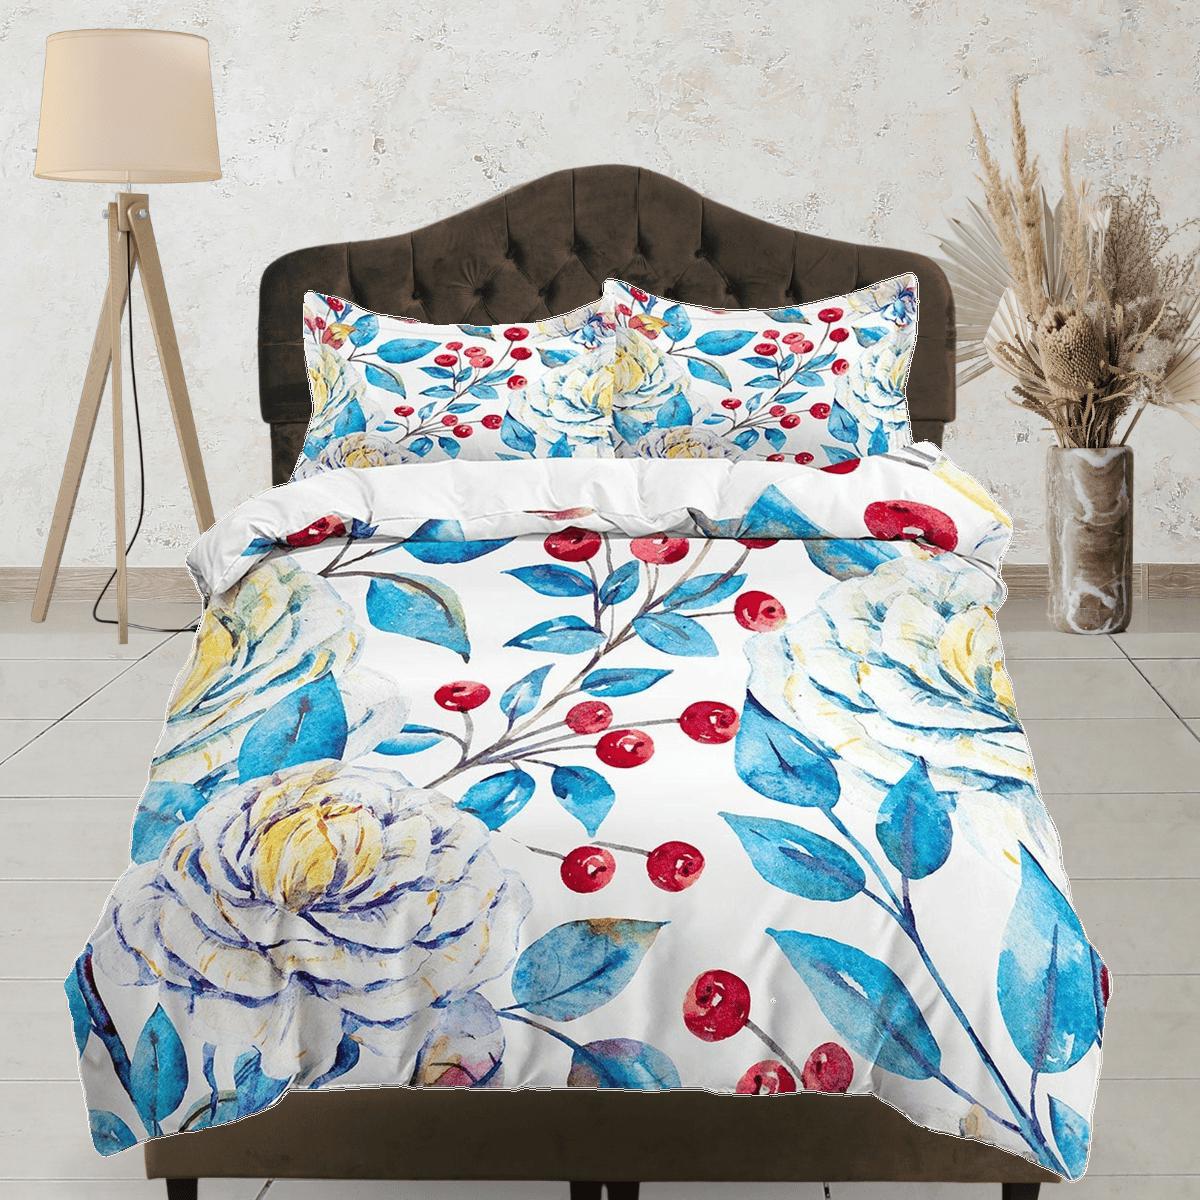 daintyduvet White peony floral duvet cover colorful bedding, teen girl bedroom, baby girl crib bedding boho maximalist bedspread aesthetic bedding